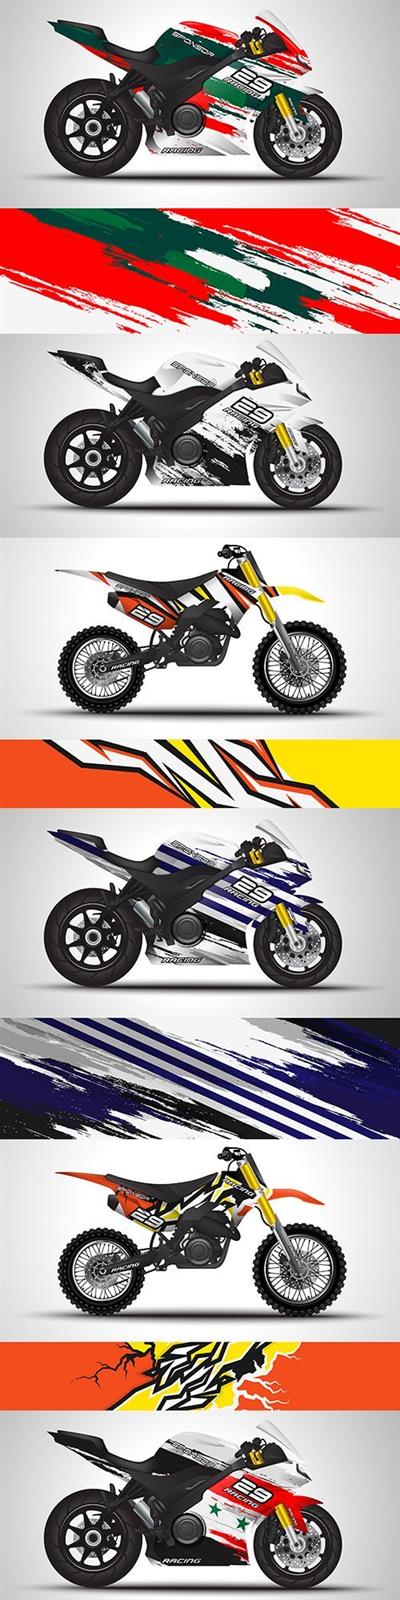 Motorcycle sticker and vinyl sticker design illustration